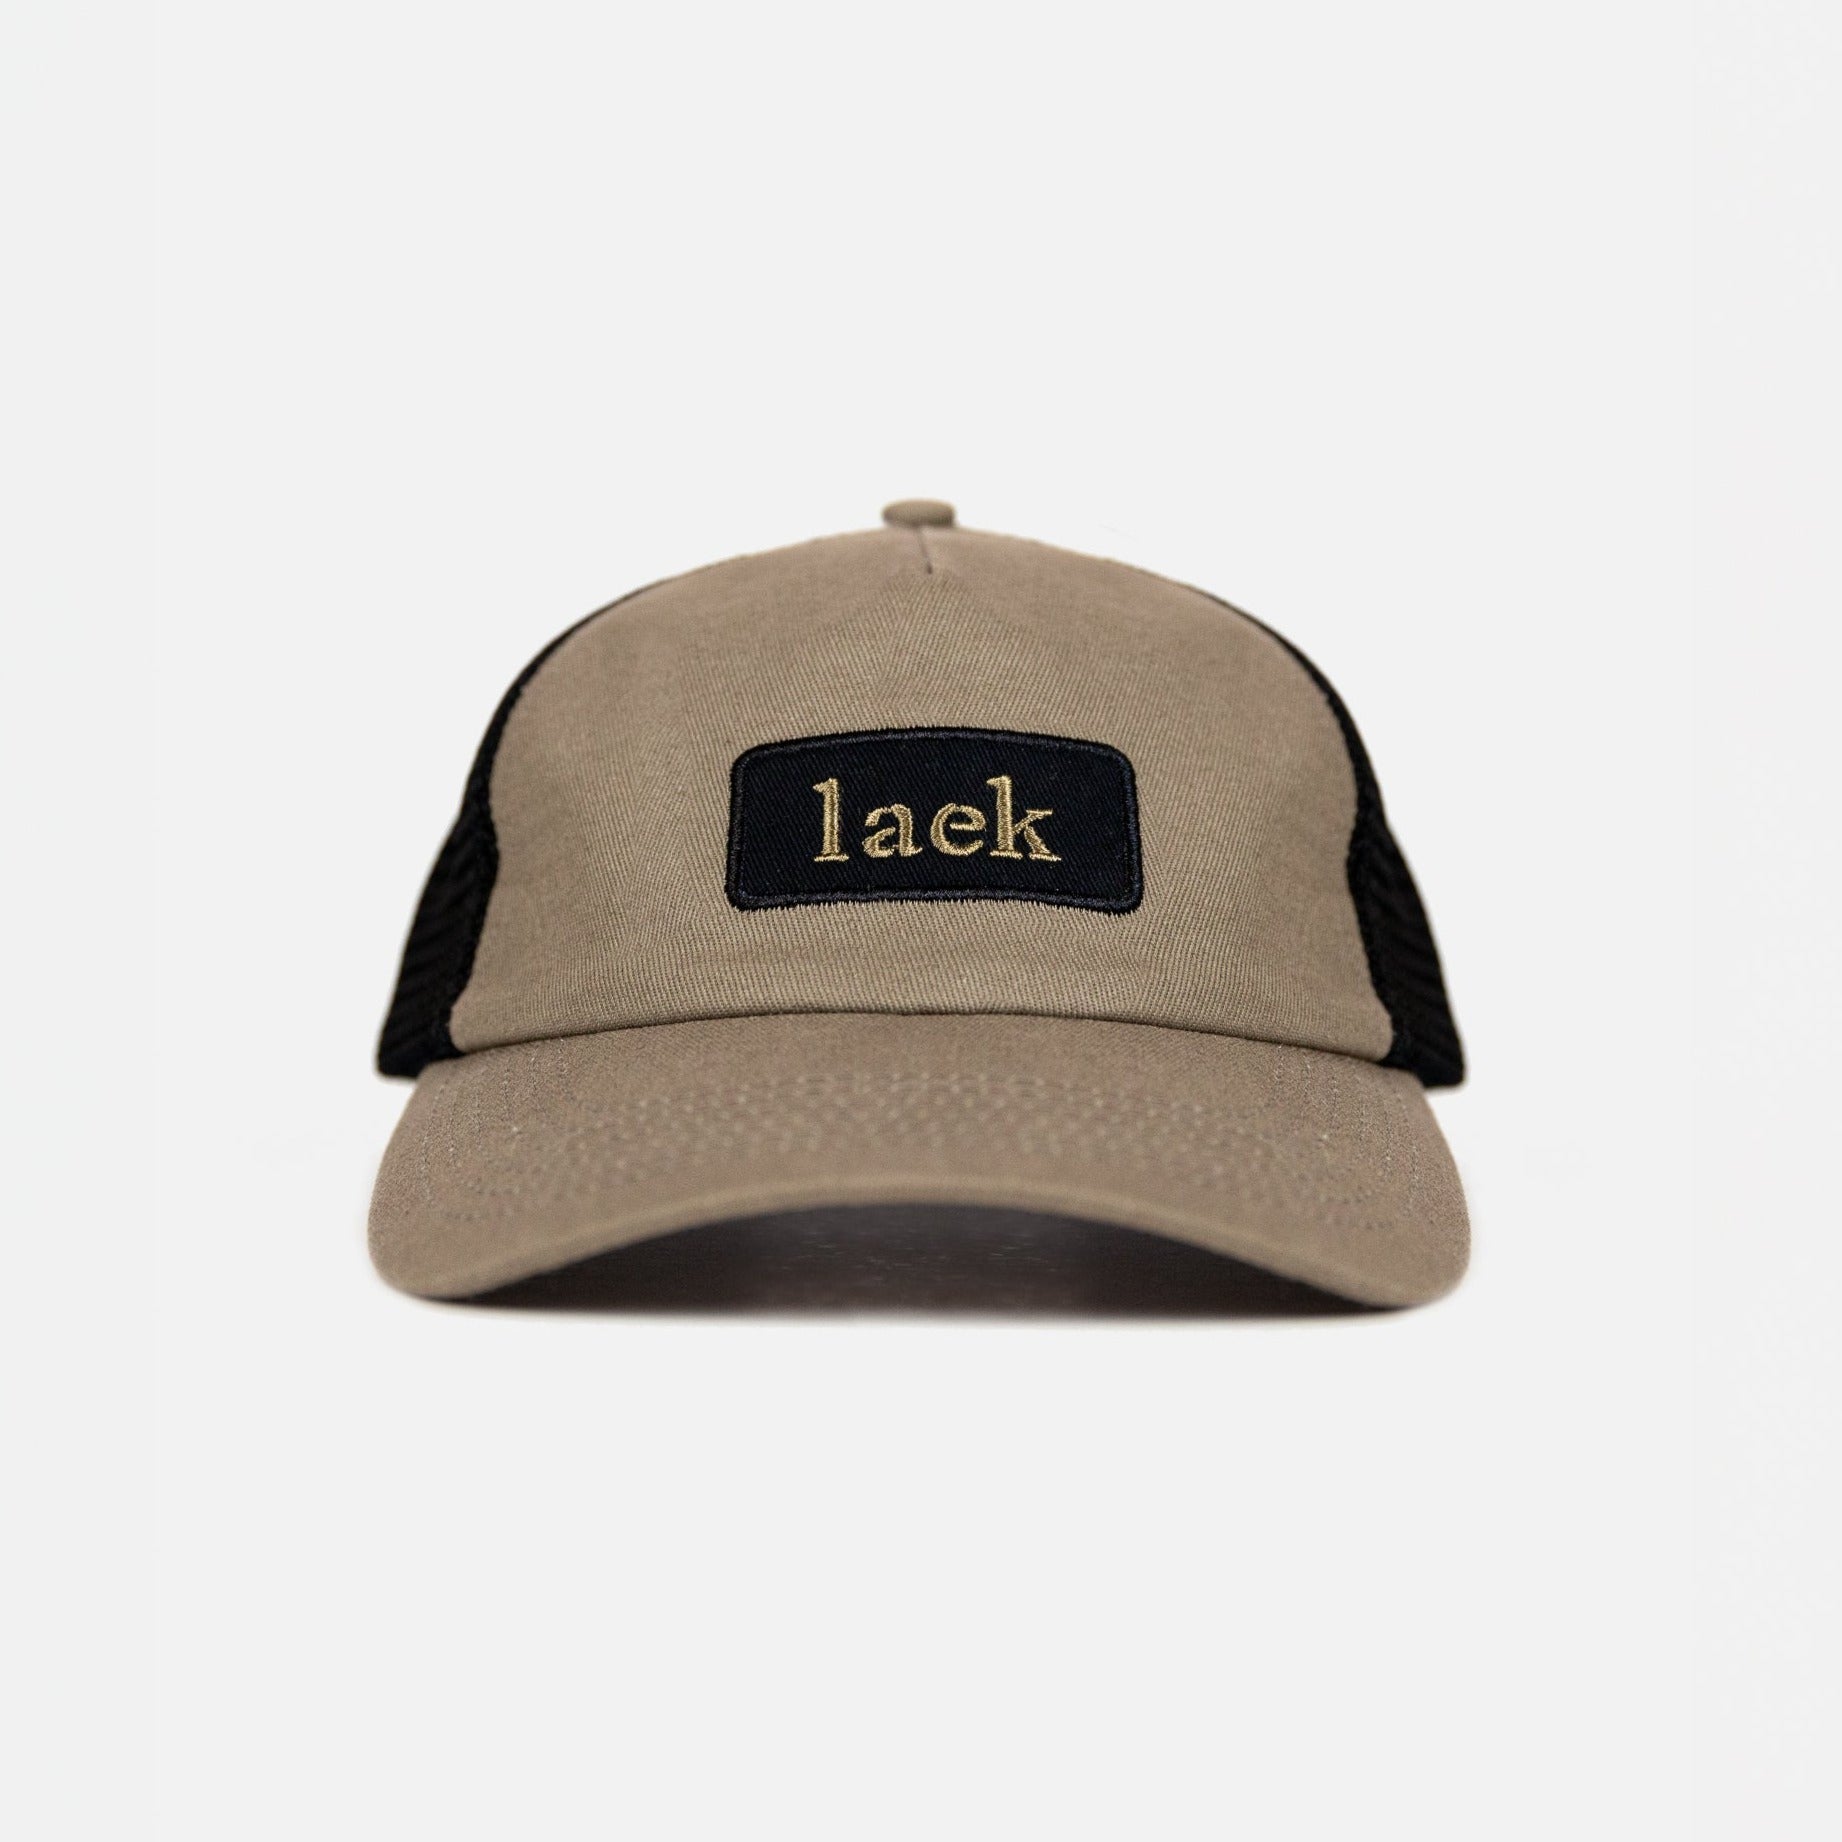 Tan Trucker Hat